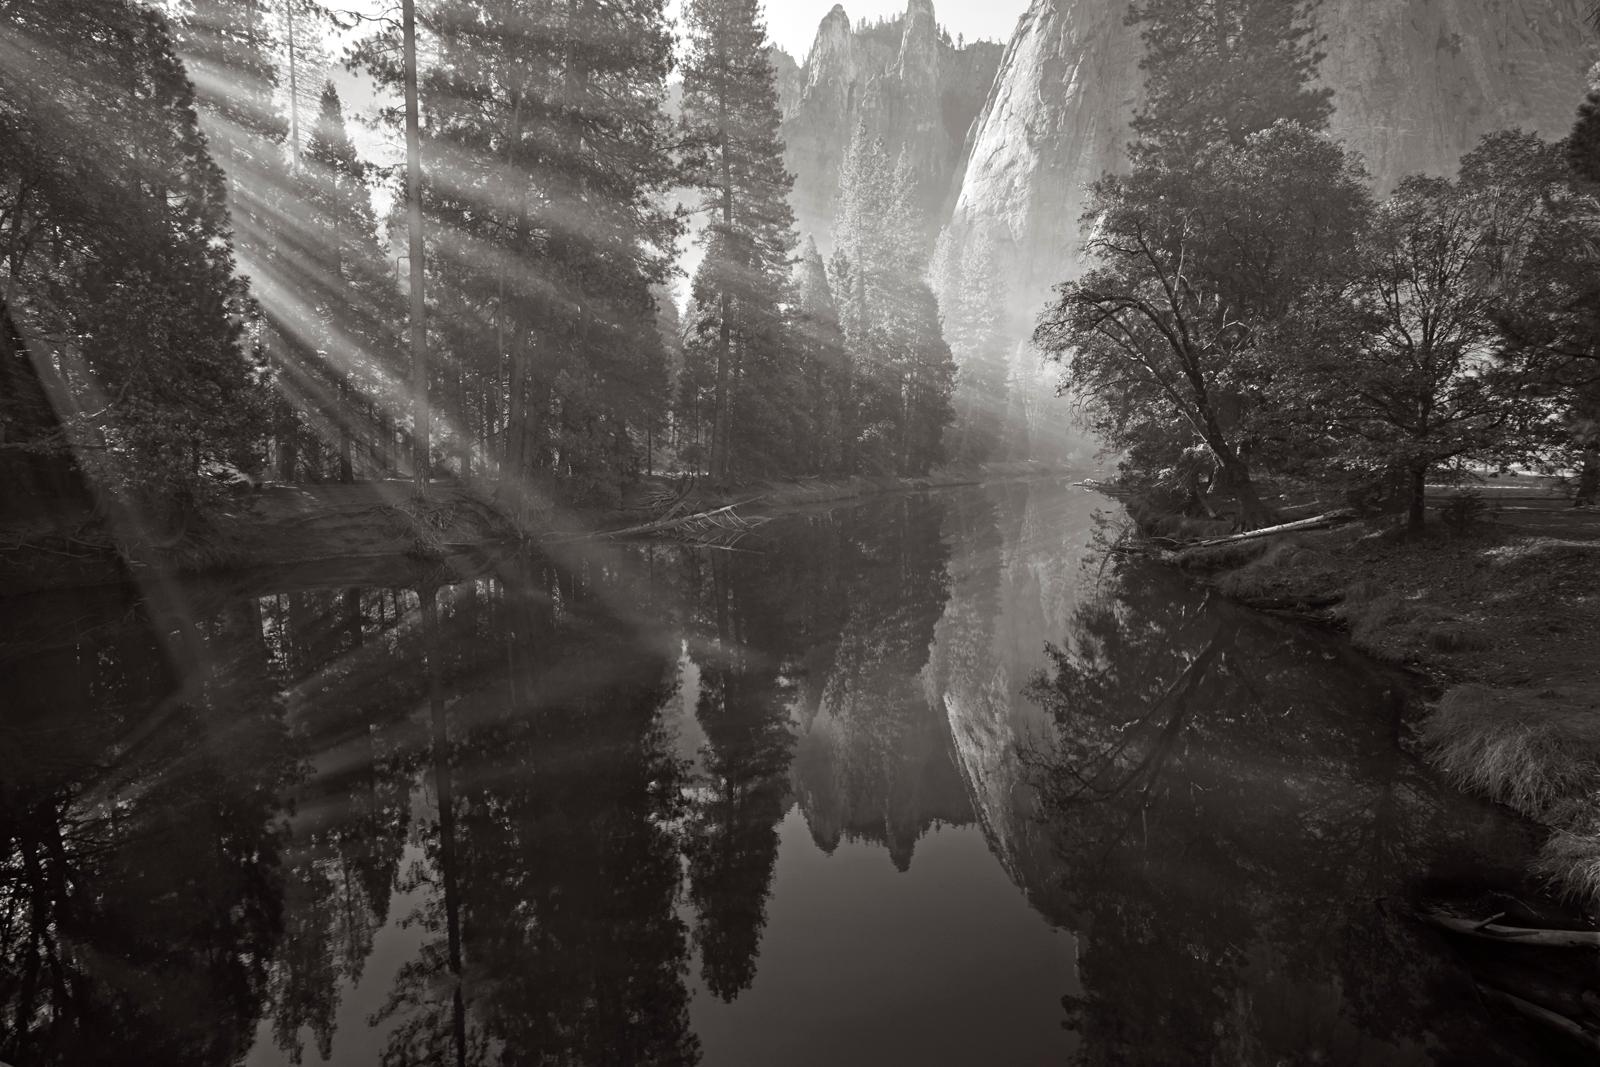 Drew Doggett Black and White Photograph - Otherworldly Light Streaming into Yosemite National Park, Black & White, Classic